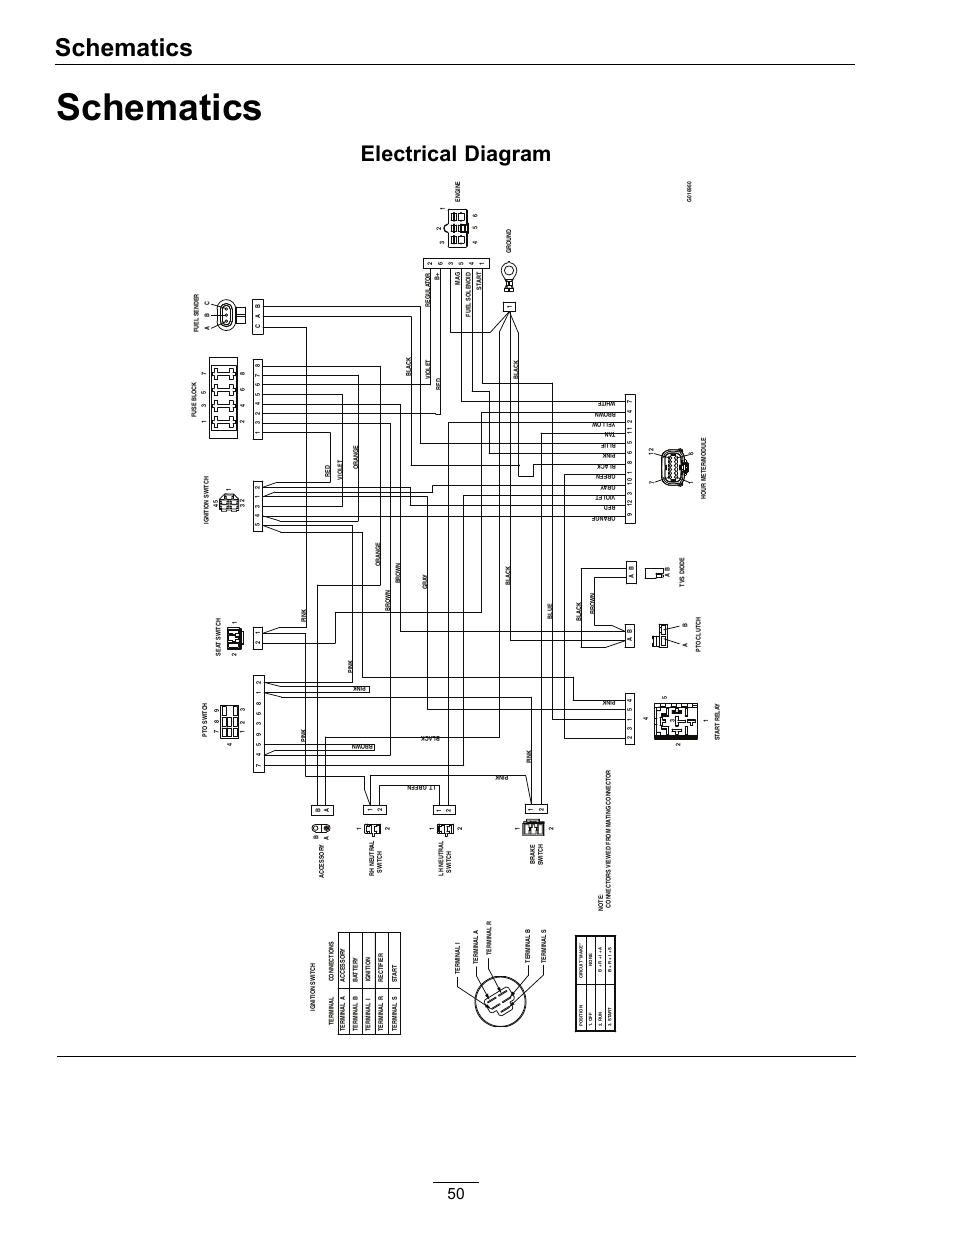 100 watt metal halide ballast wiring diagram